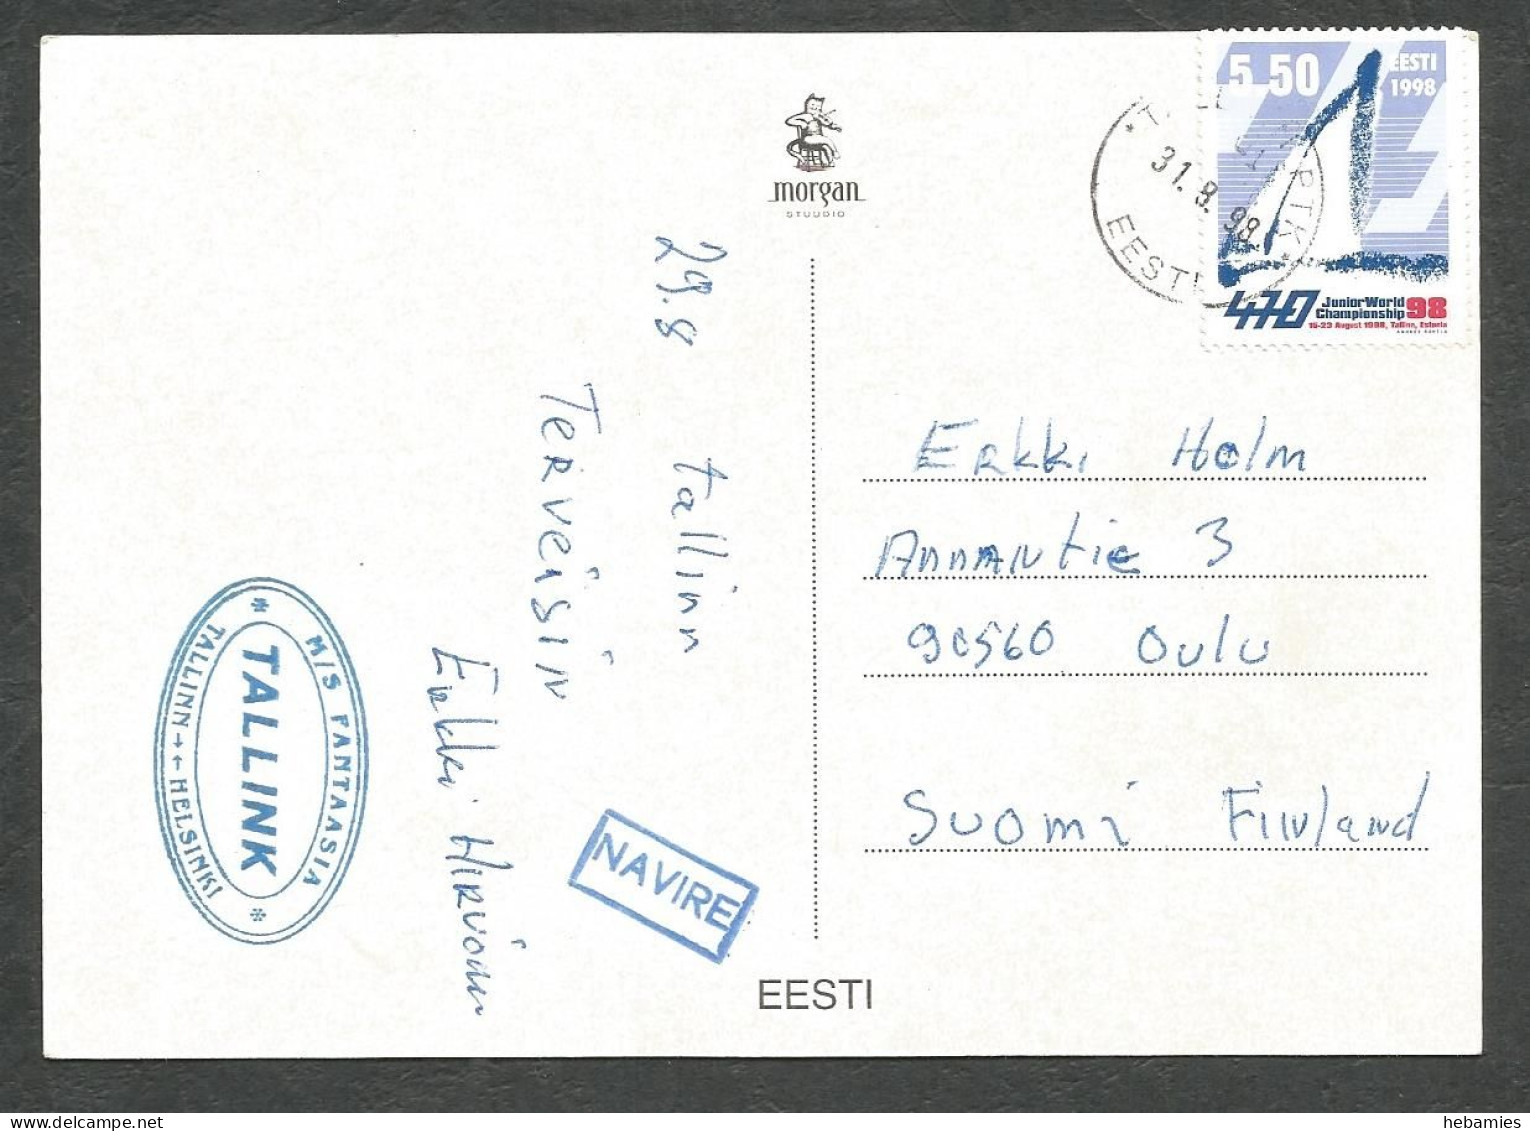 ESTONIAN CASTLES - Special Ship Stamped M/S FANTASIA / TALLINK - ESTONIA - EESTI - - Kastelen